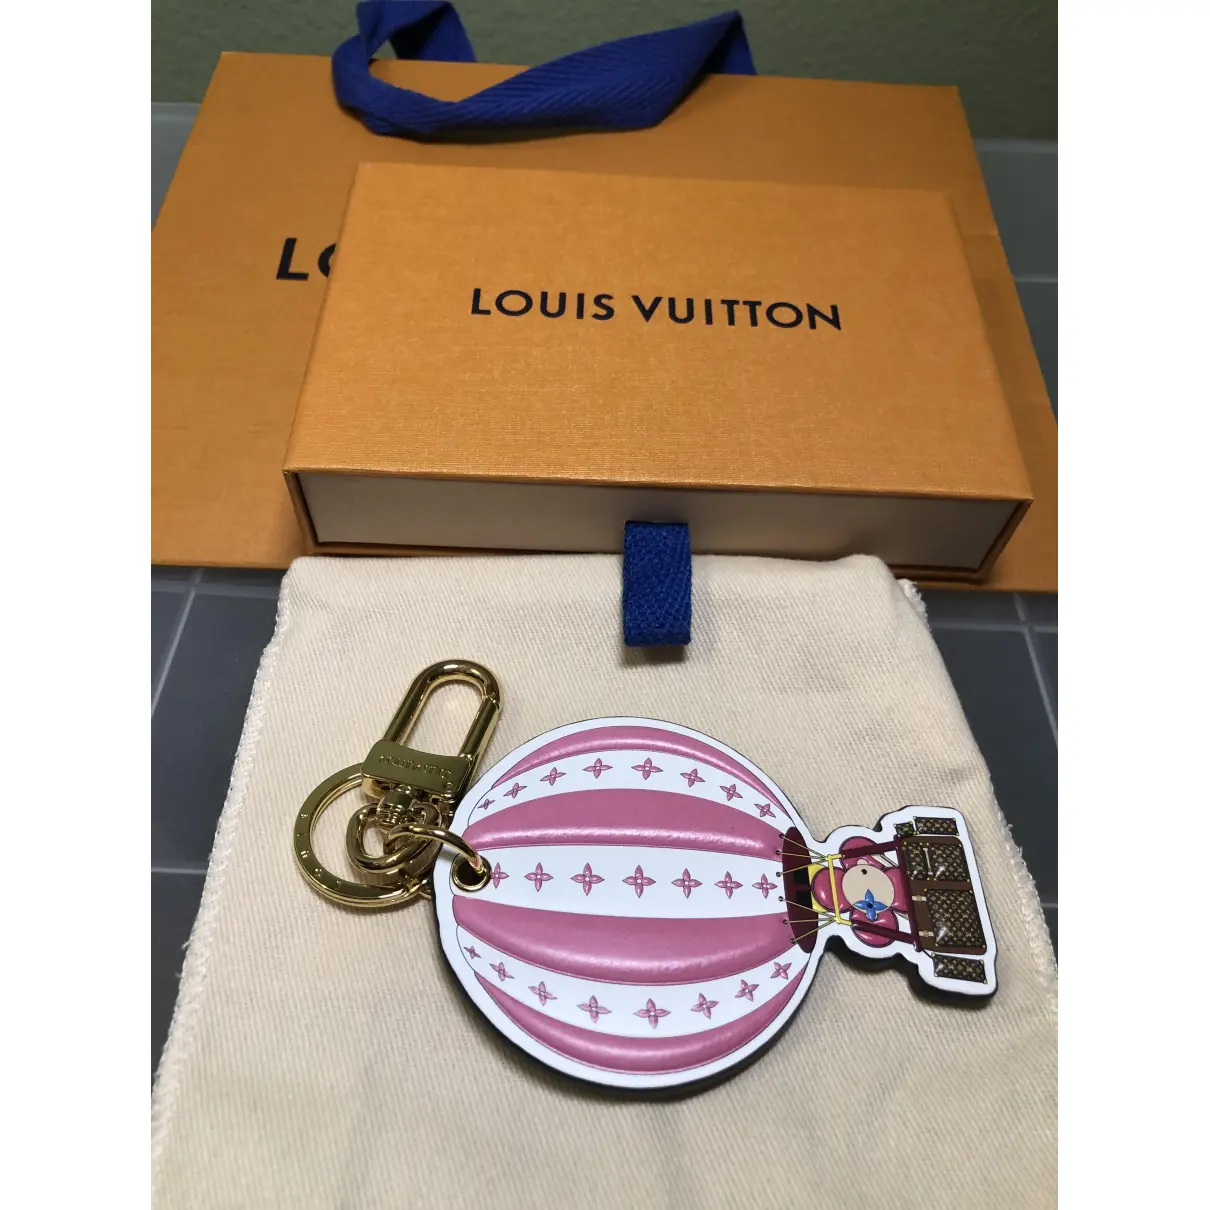 Buy Louis Vuitton Leather bag charm online